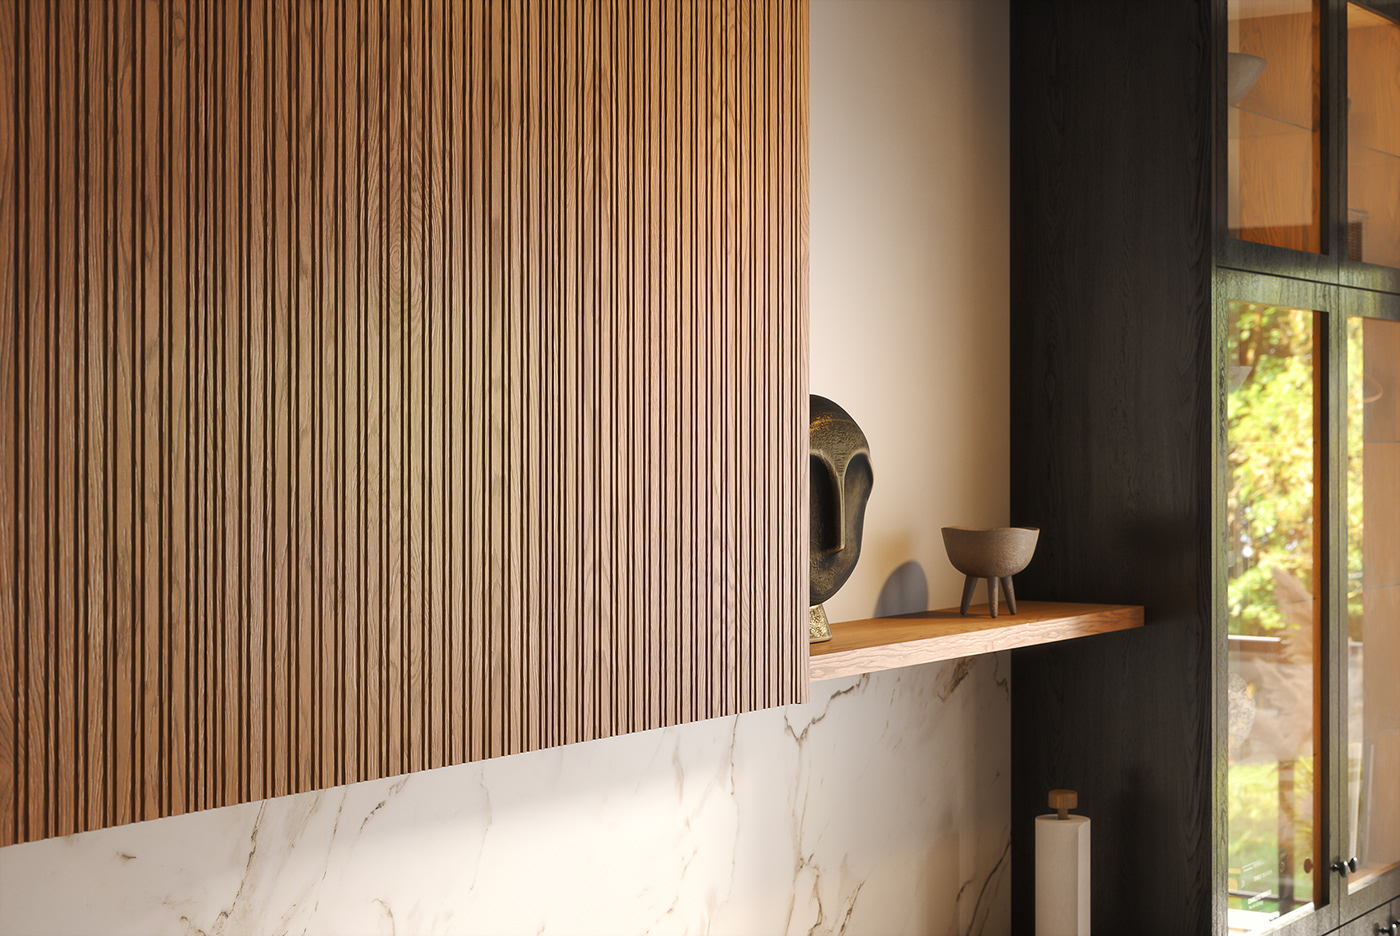 Design furniture wood designer wooden furniture kitchen design corona render  visualization modern interior living room modern kitchen